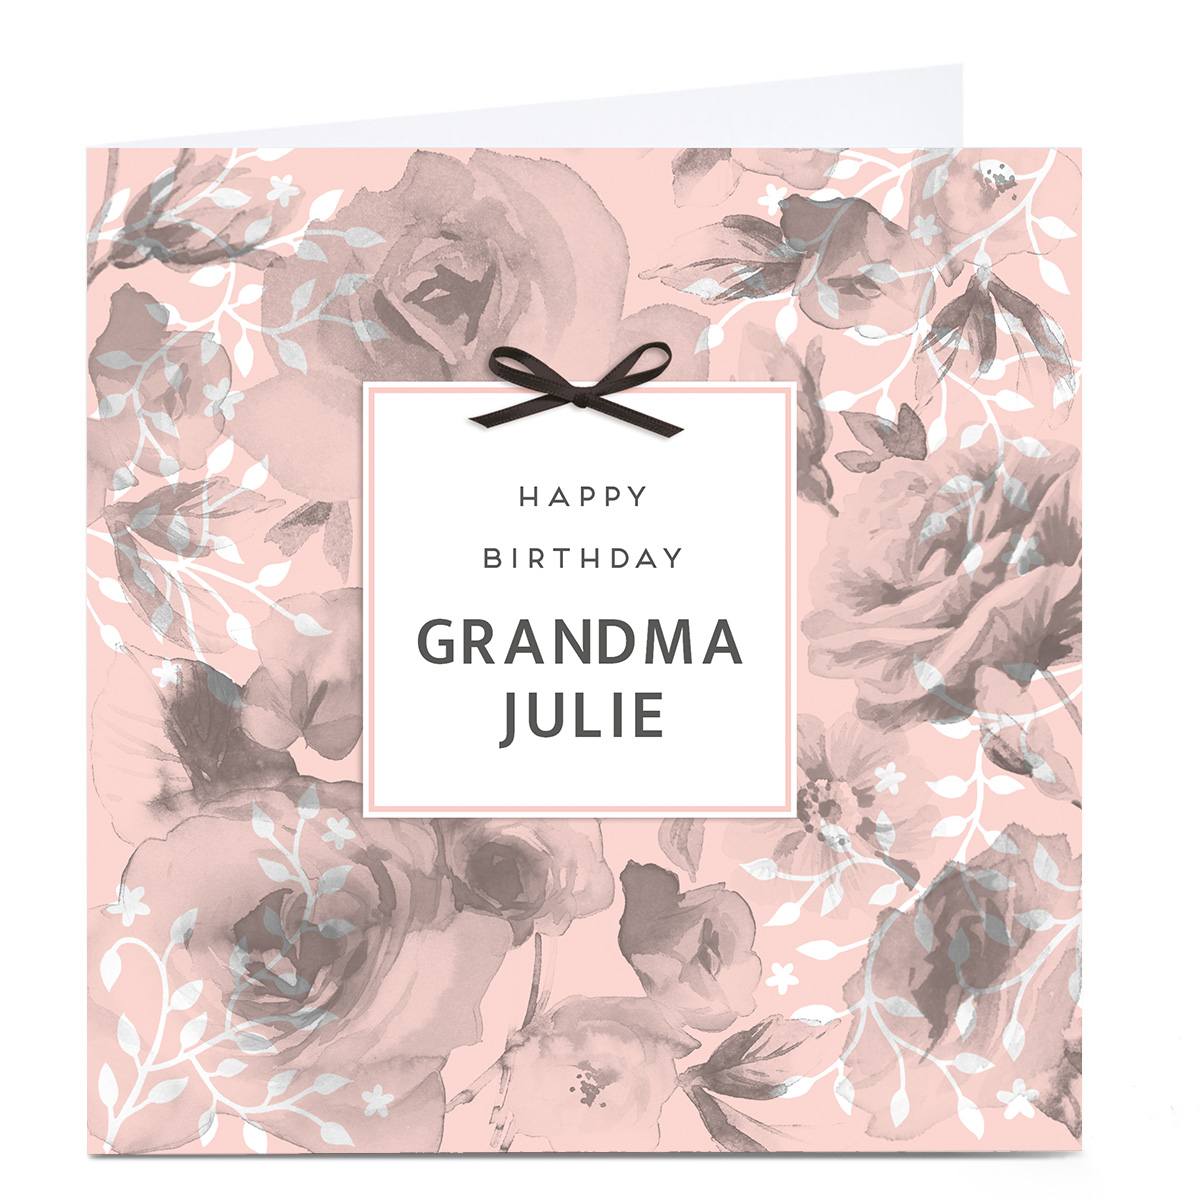 Personalised Birthday Card - Pink Roses and Bows, Grandma